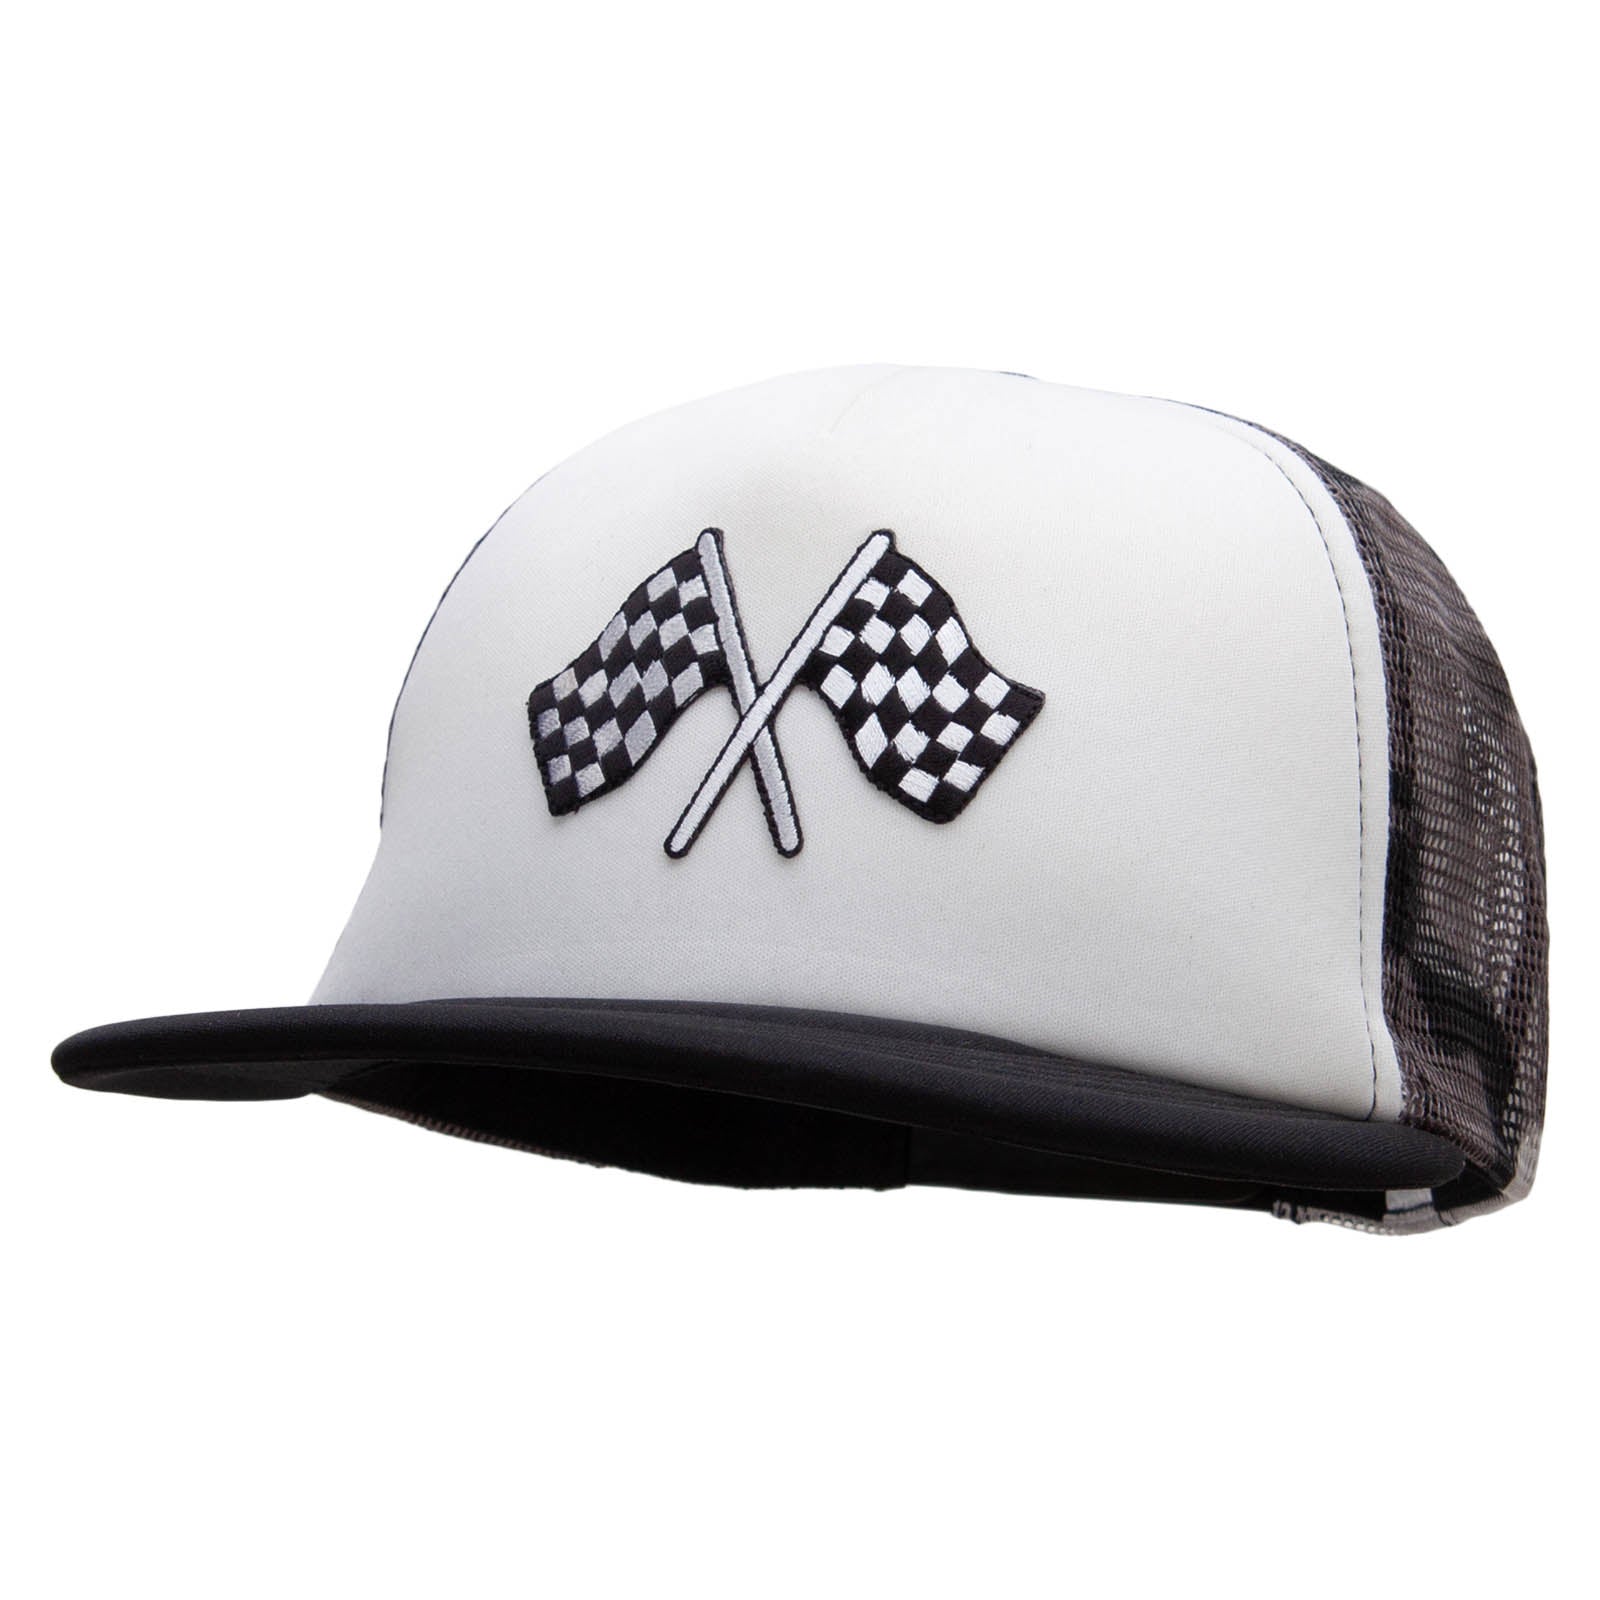 Checkered Flags | Cap Patched Leisure Trucker Bill – Mesh Racing Foam Camo Designed e4Hats | Flat